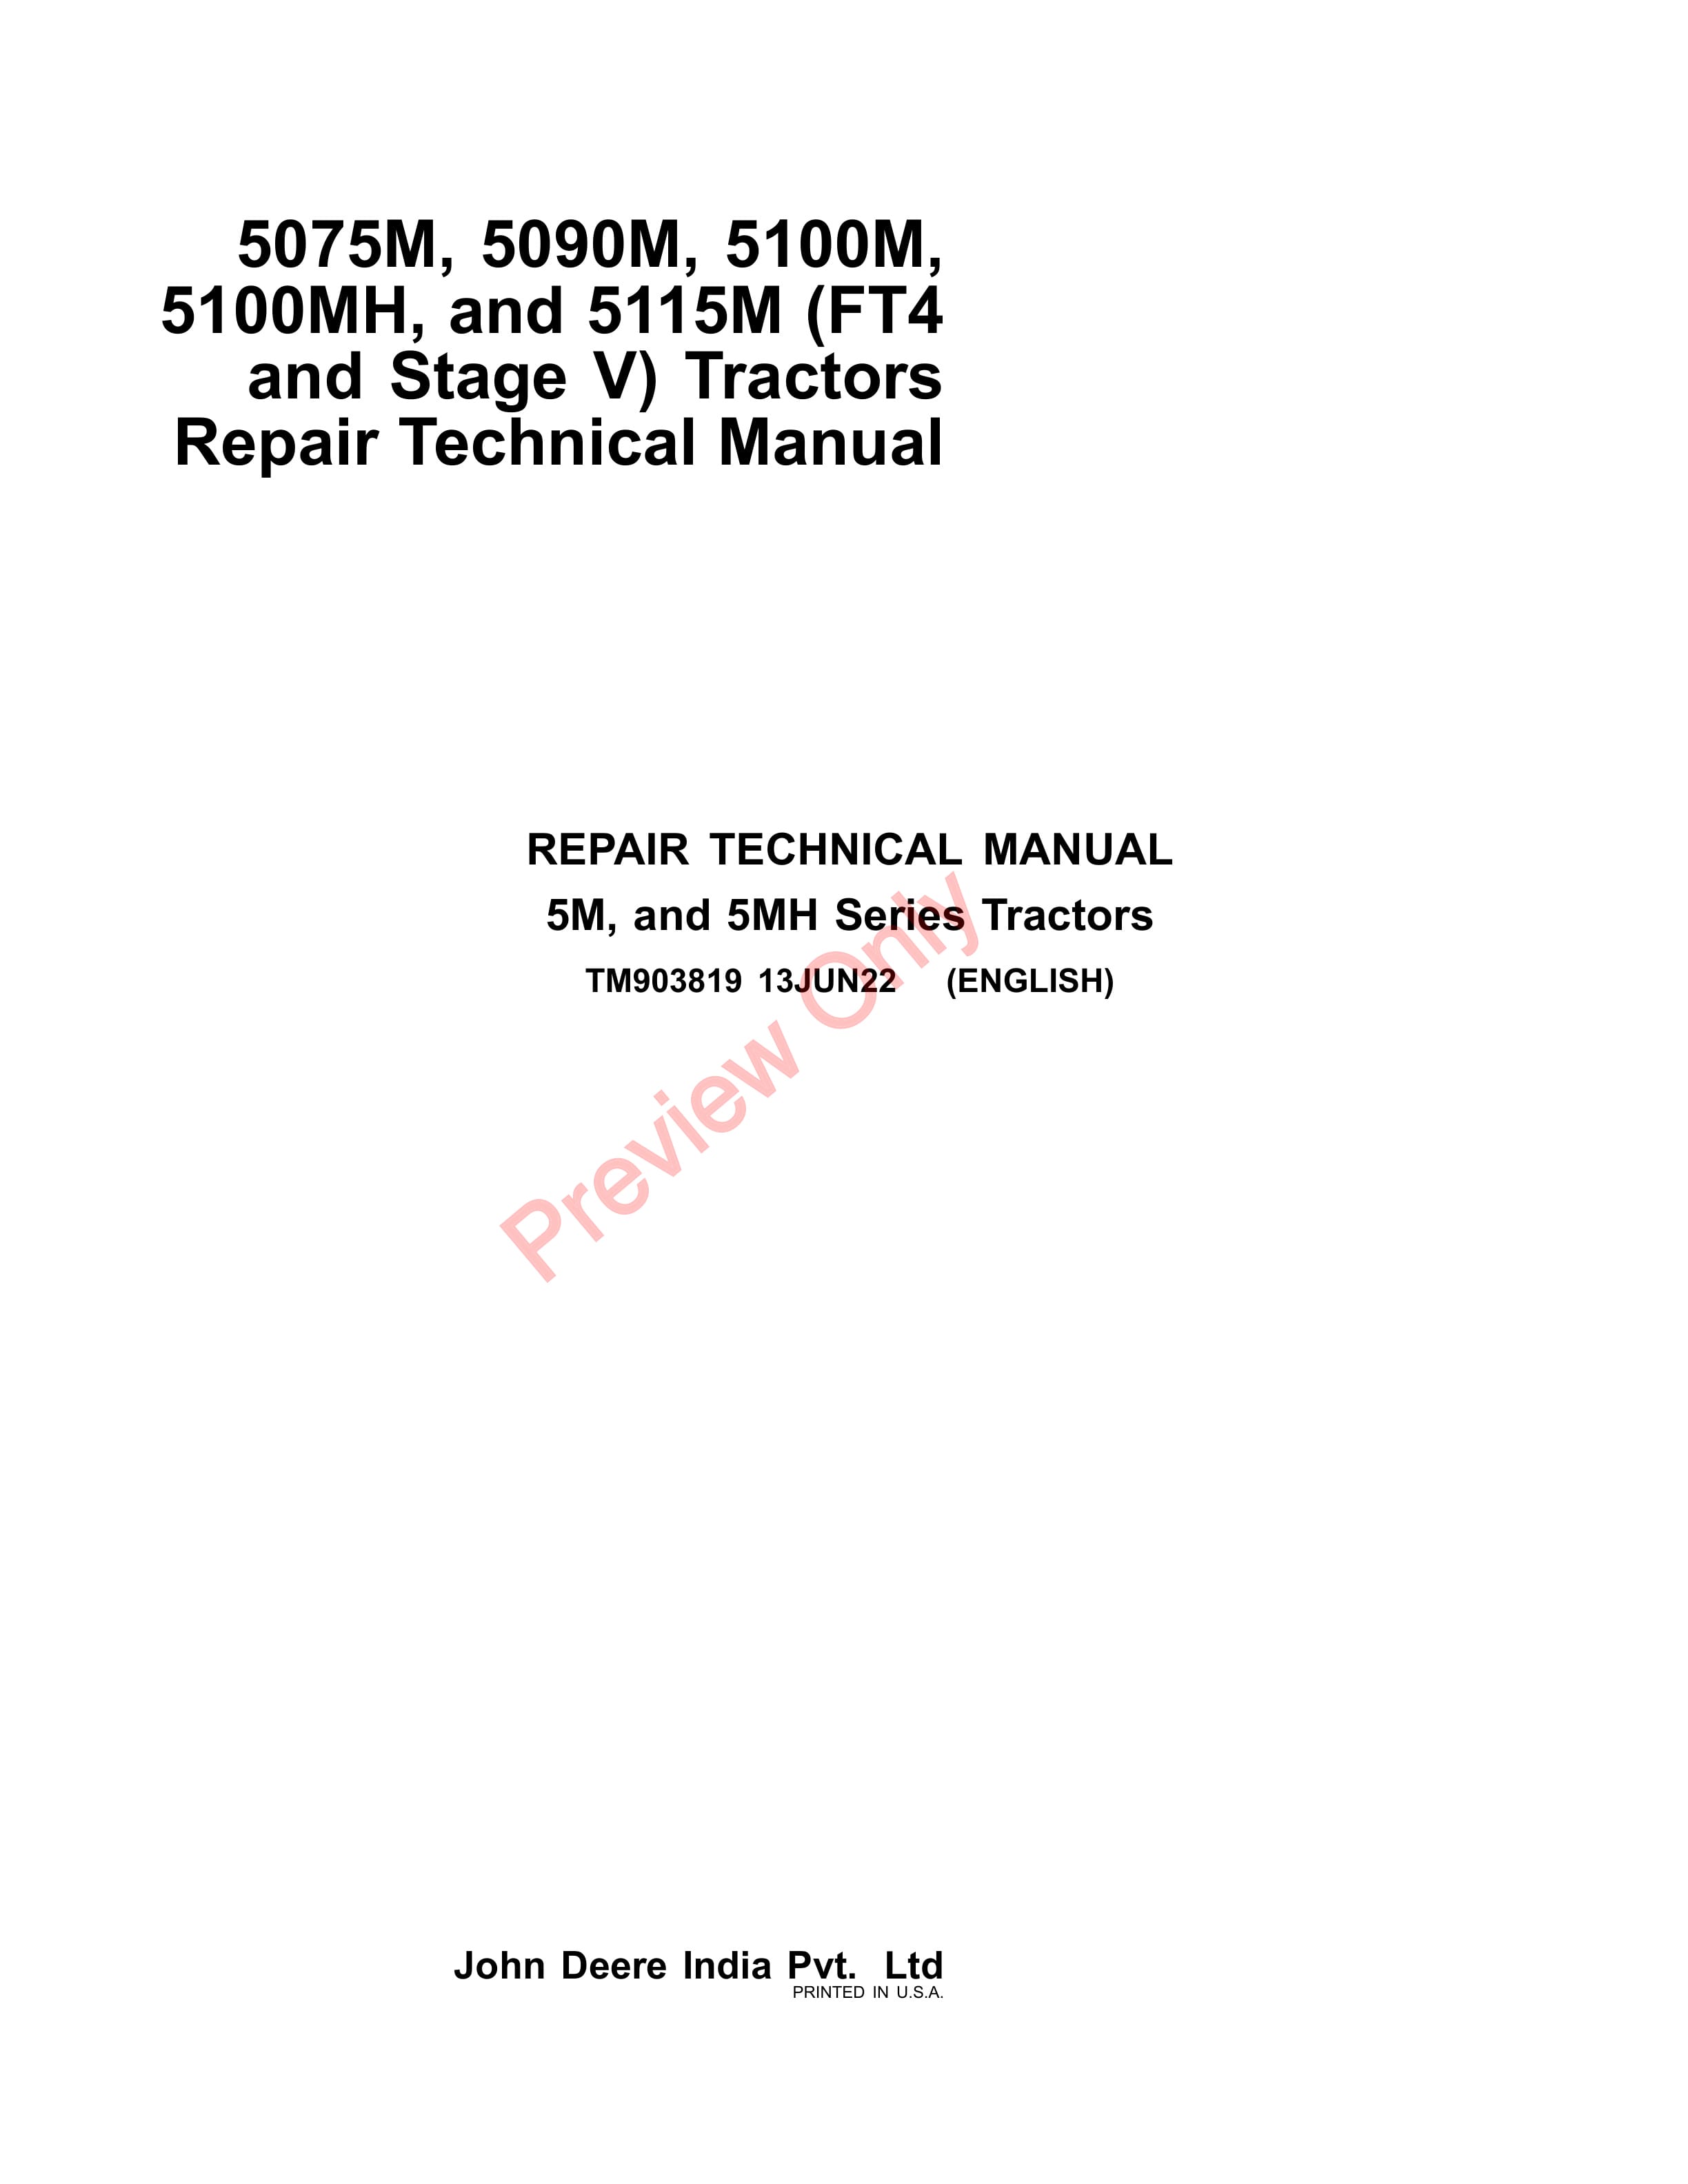 John Deere 5075M 5090M 5100M 5100MH and 5115M FT4 and Stage V Tractors Repair Technical Manual TM903819 13JUN22 1